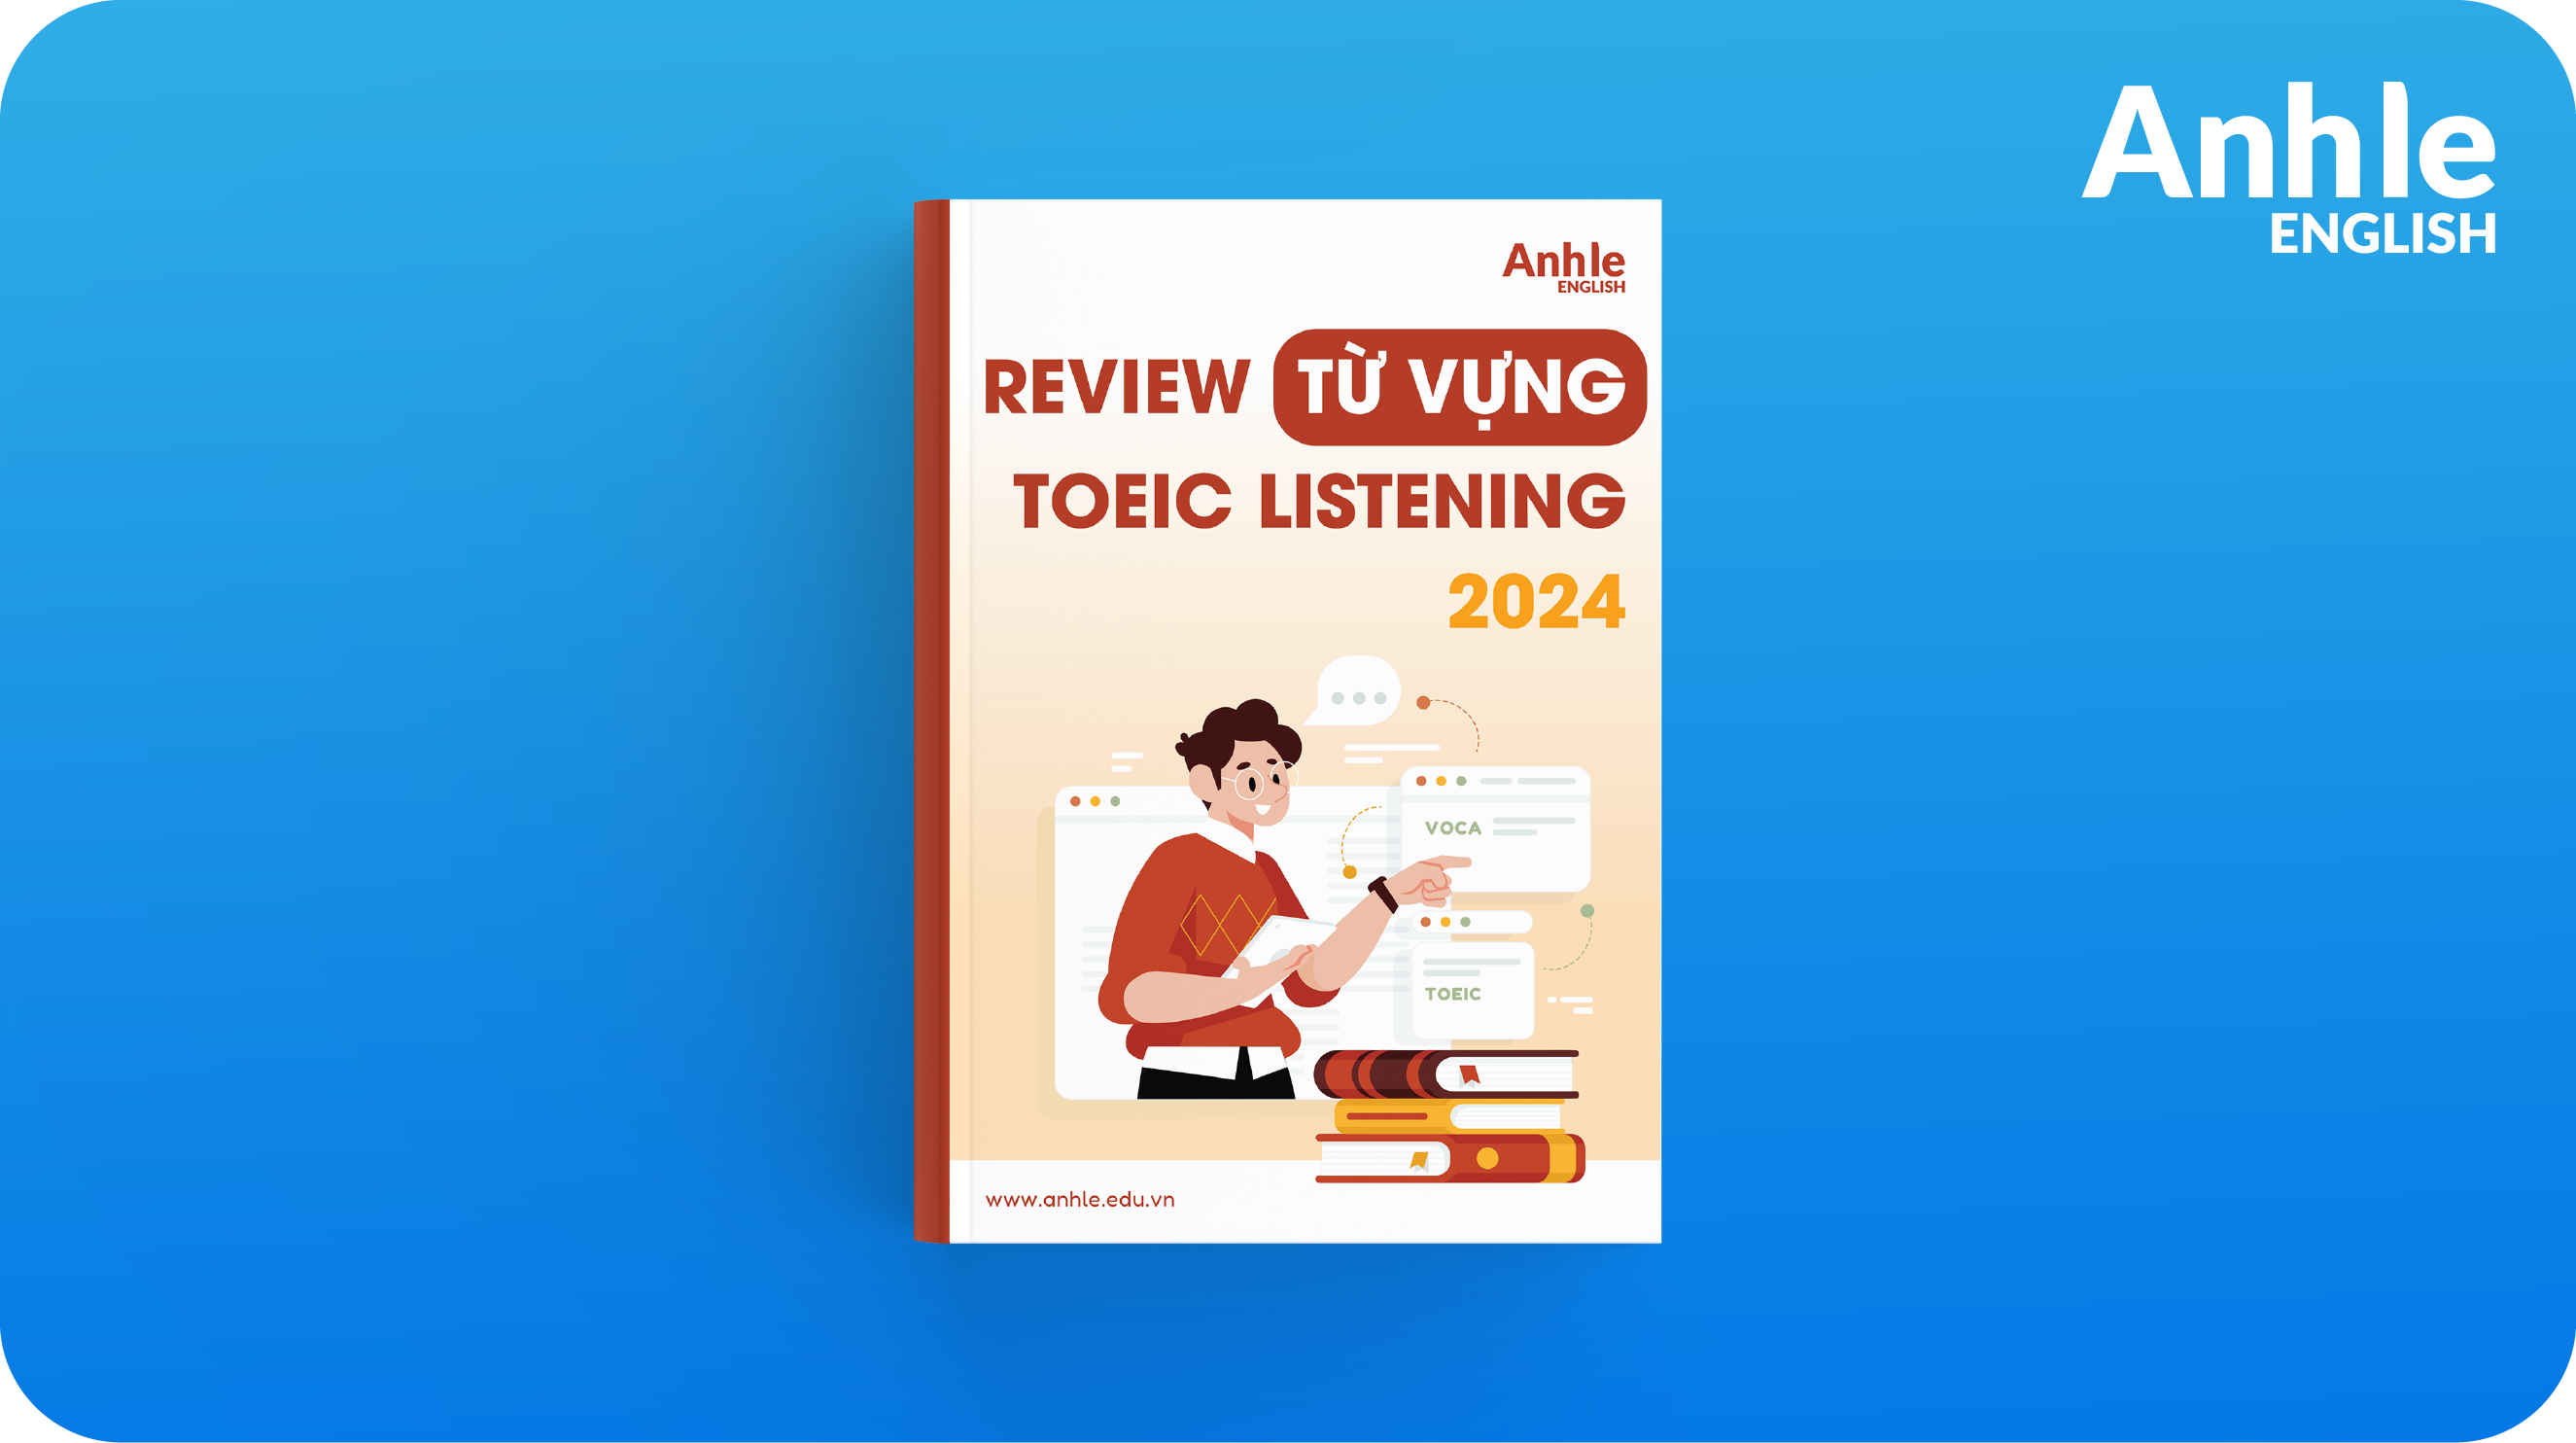 REVIEW TỪ VỰNG TOEIC LISTENING